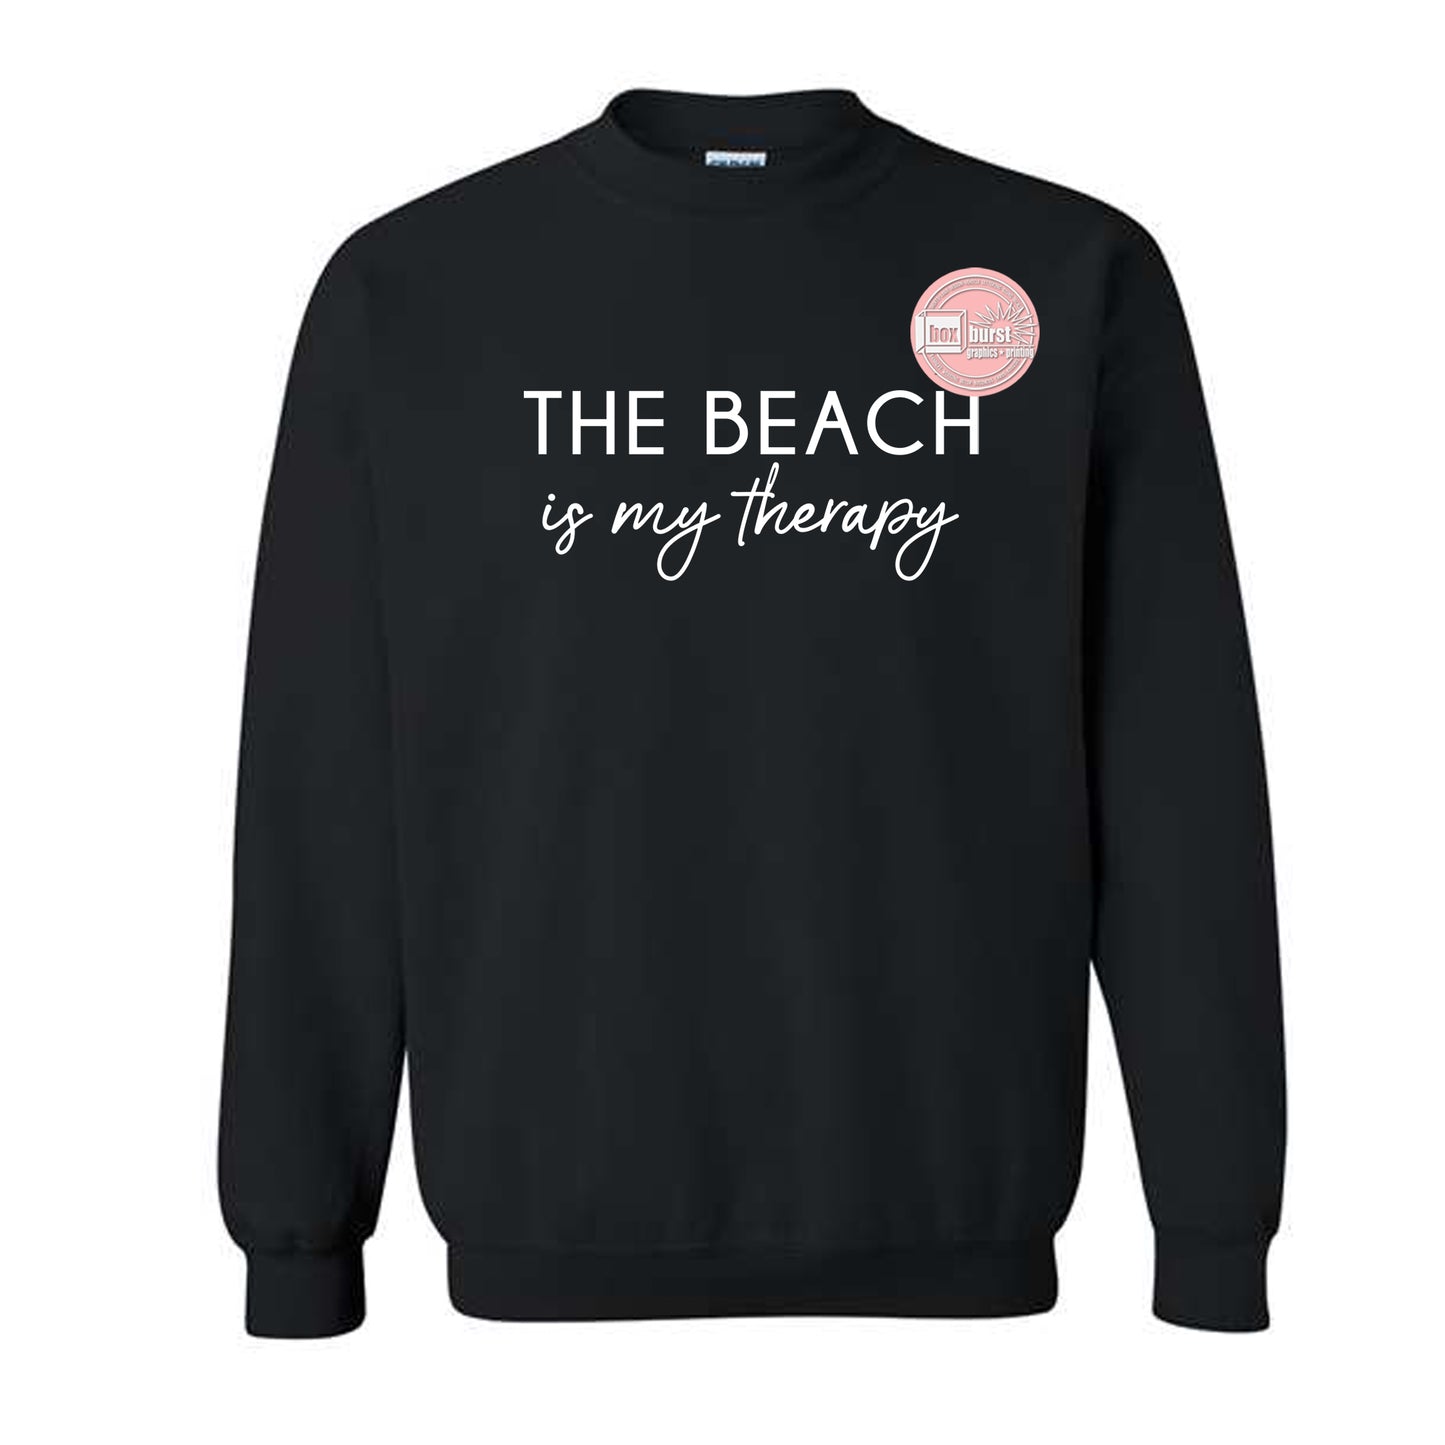 Beach Therapy sweatshirt